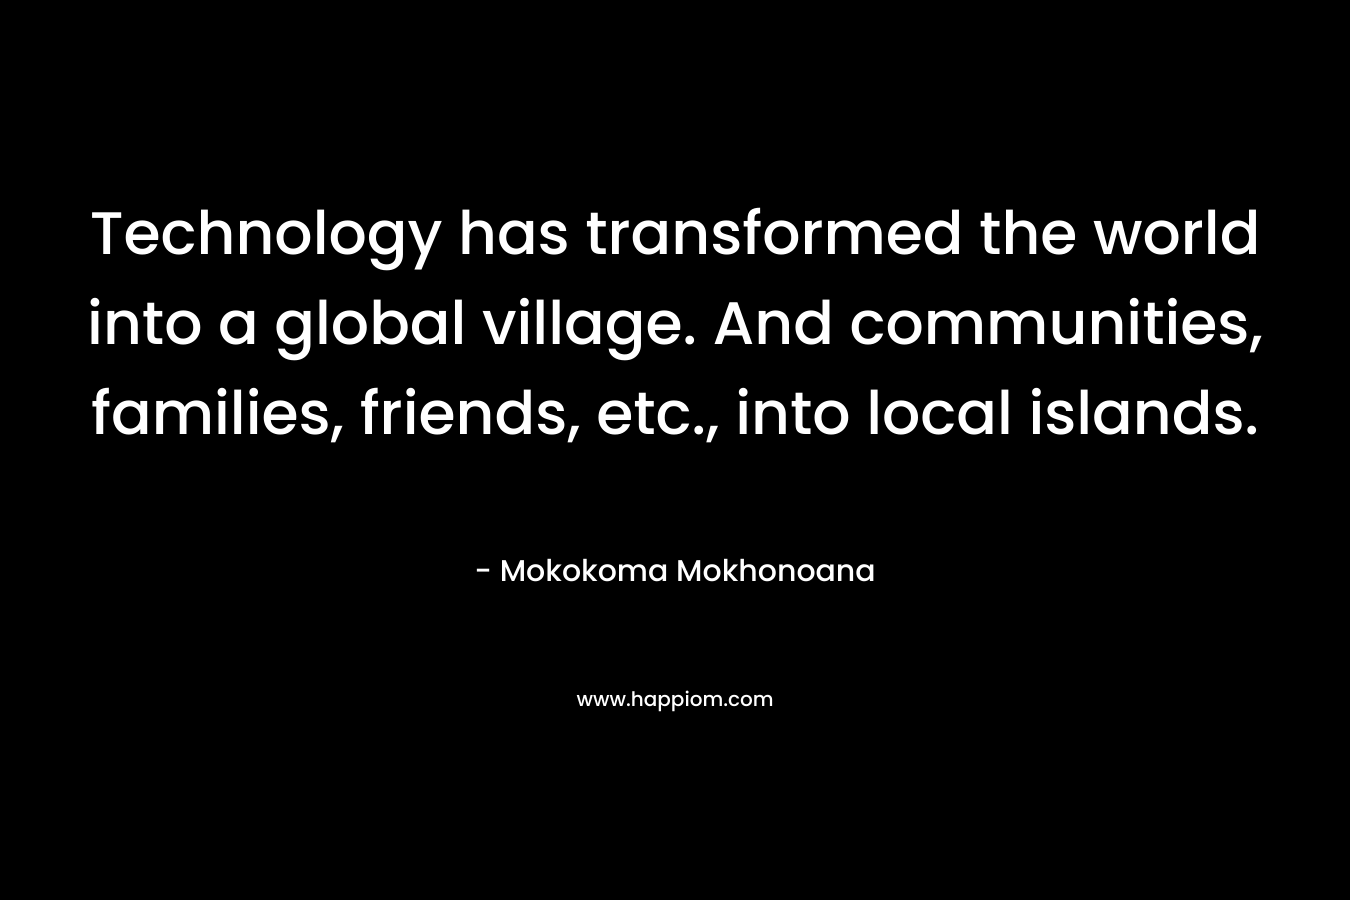 Technology has transformed the world into a global village. And communities, families, friends, etc., into local islands. – Mokokoma Mokhonoana